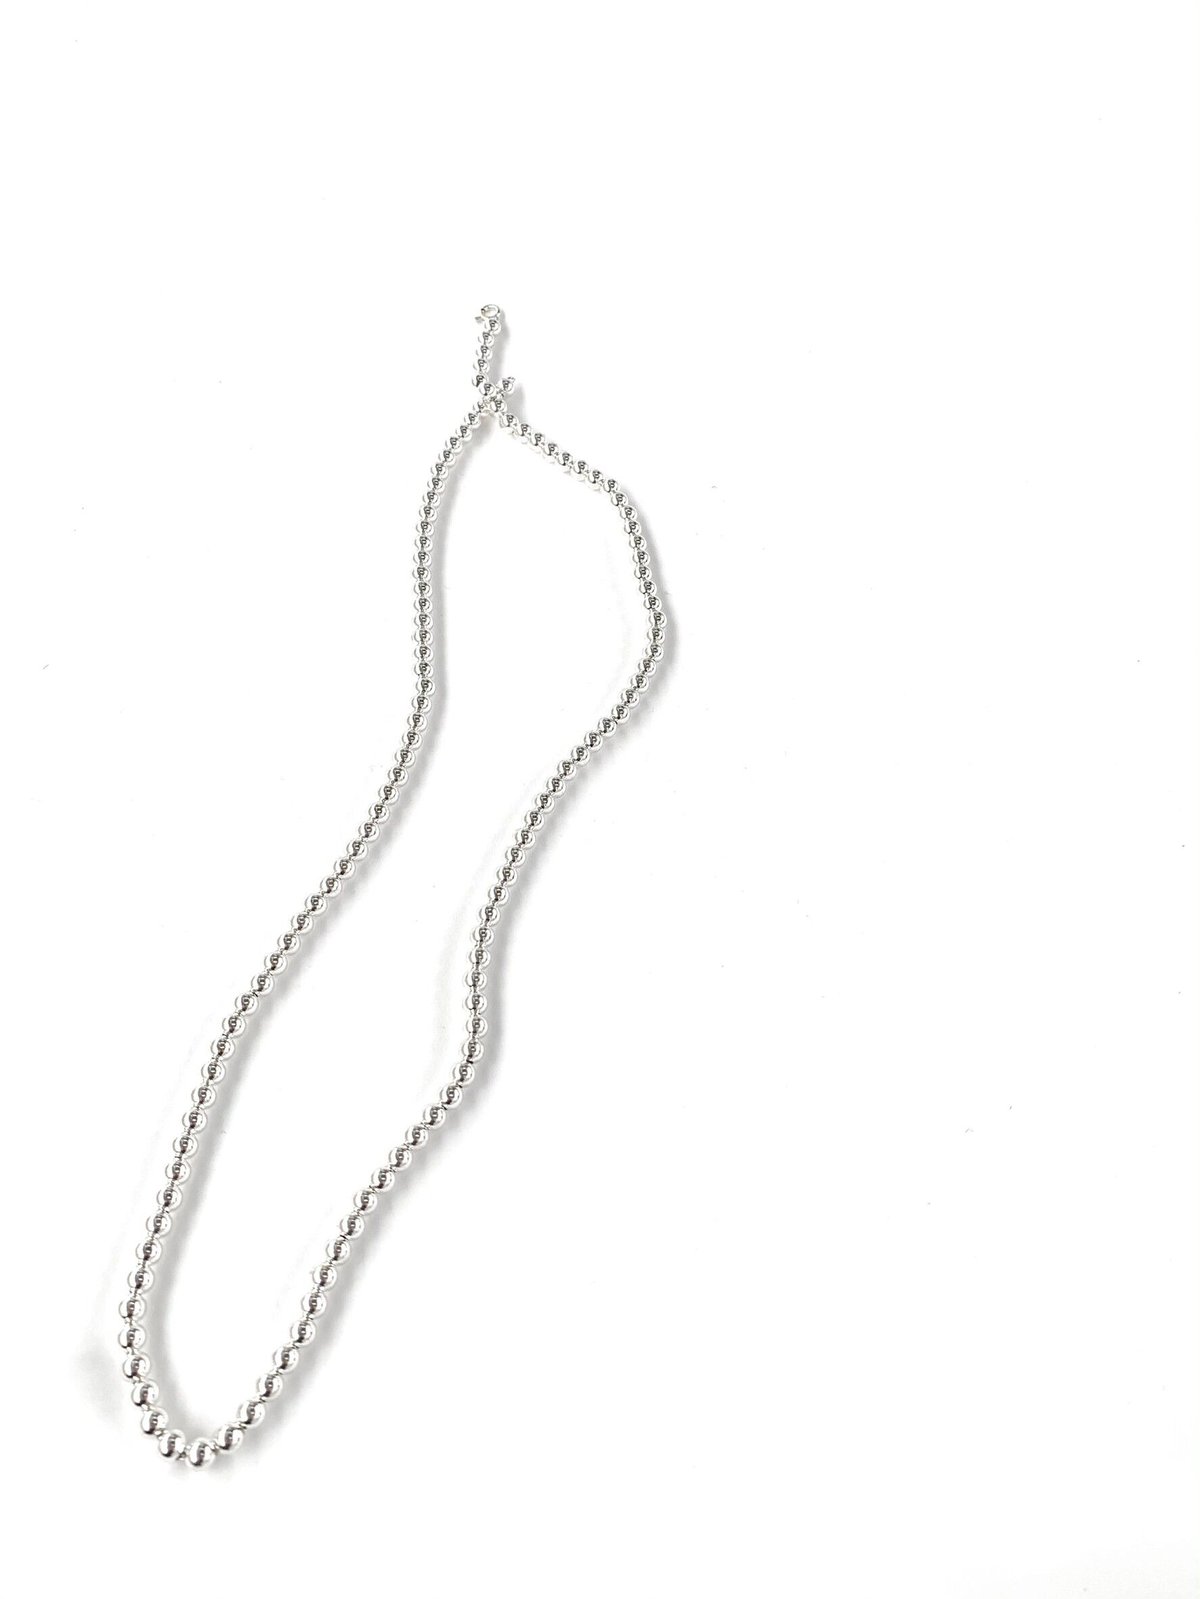 Silver925 Ball Chain Necklace〈21-910046〉 | ＡＧＡＷＤ